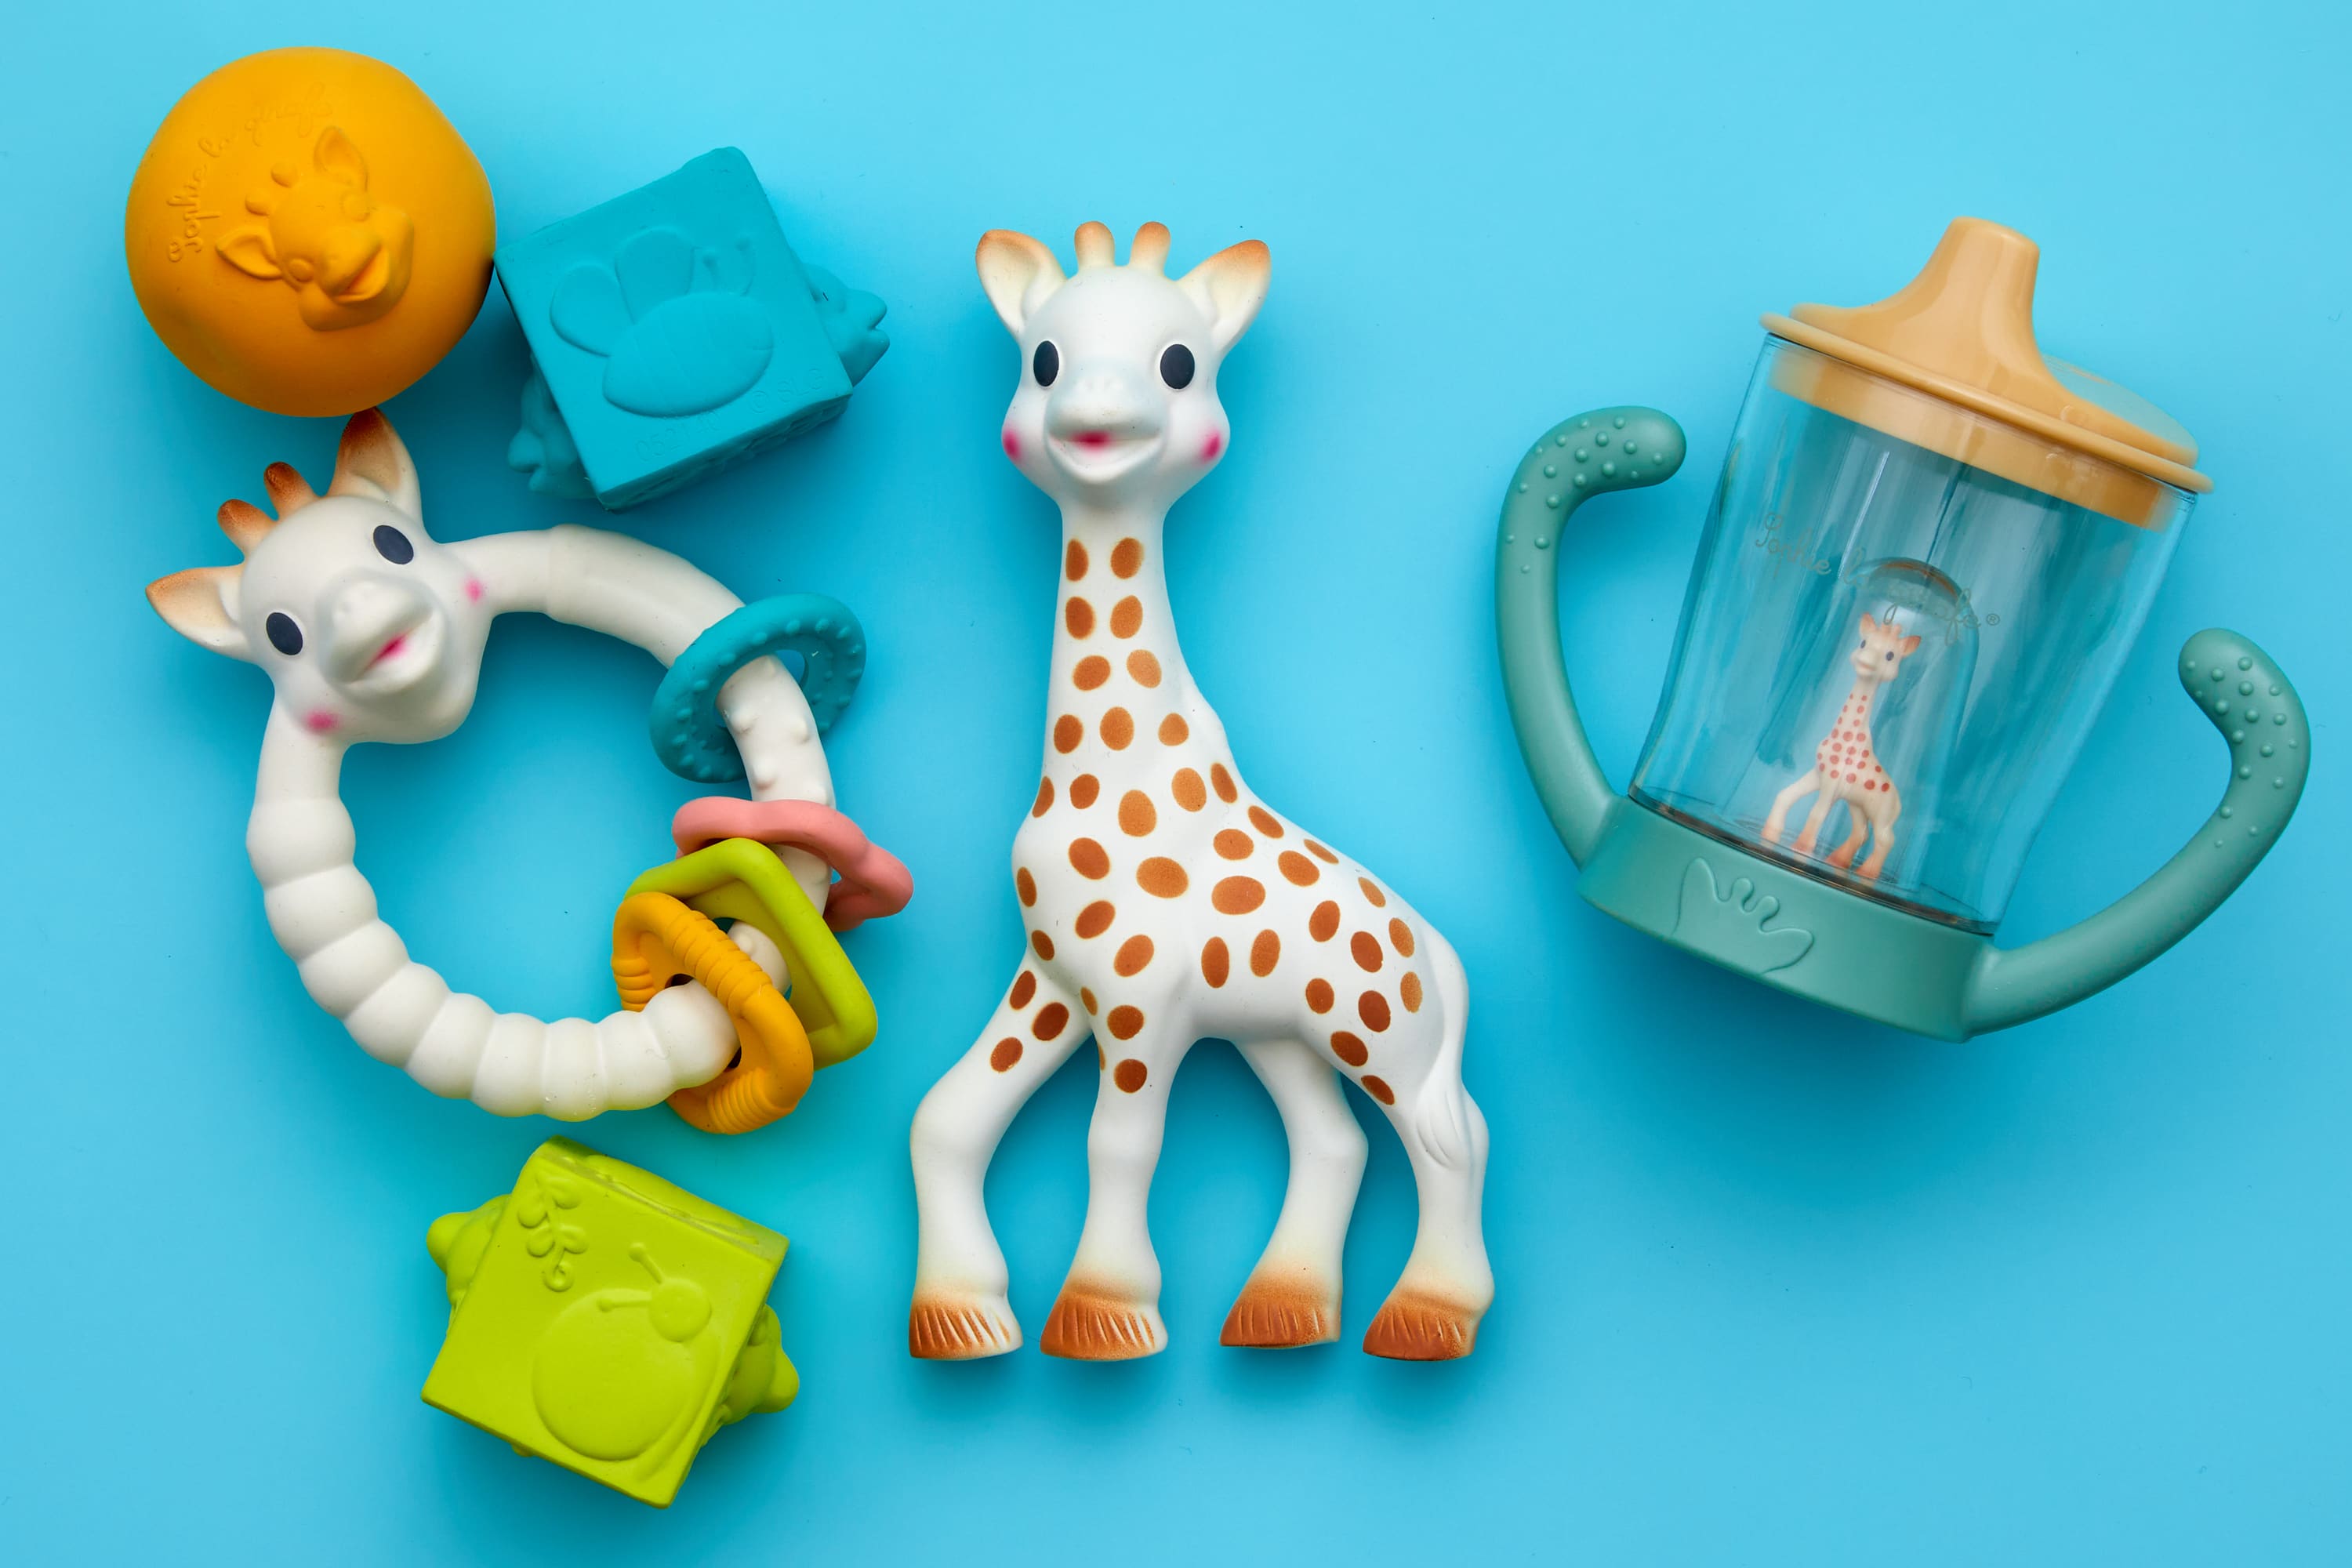 Baby Seat & Play - Sophie La Girafe – Calisson Toys